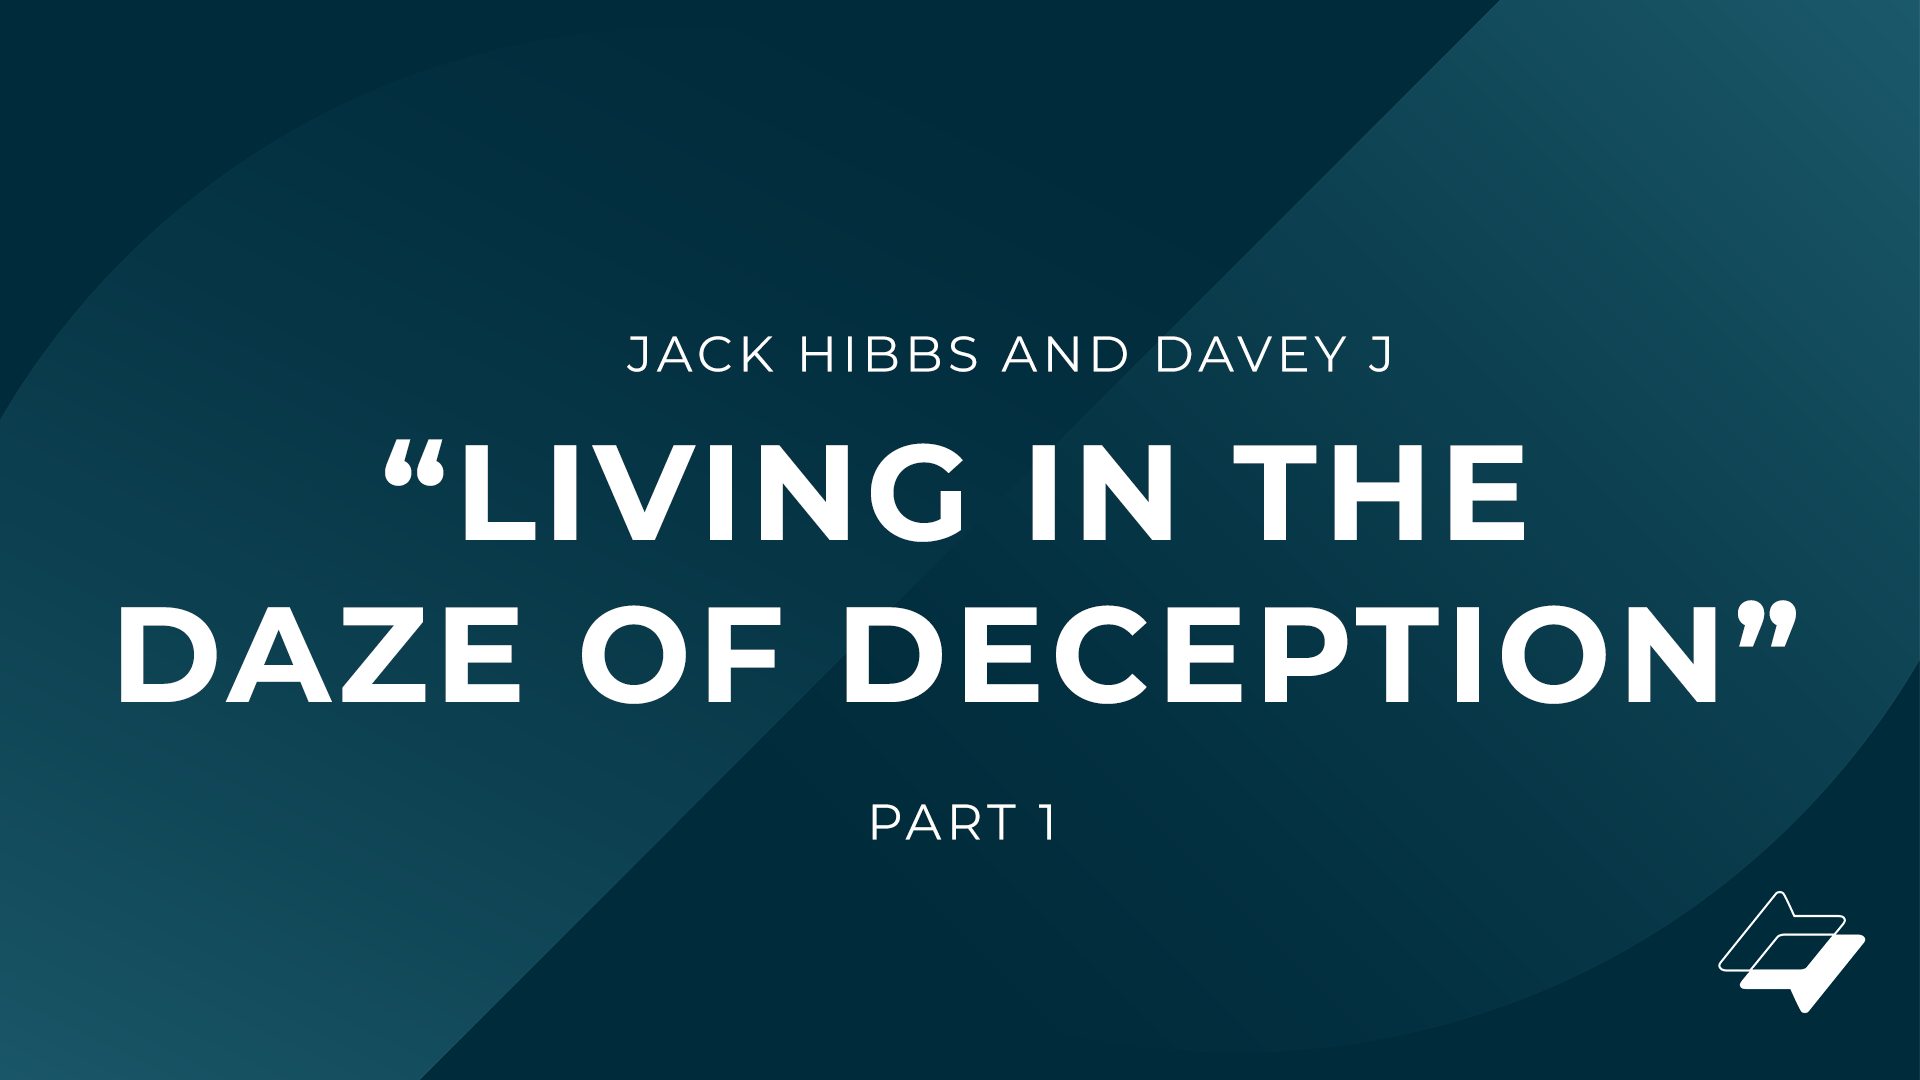 Jack Hibbs and Davey J regarding “Living in the Daze of Deception” – Part 1